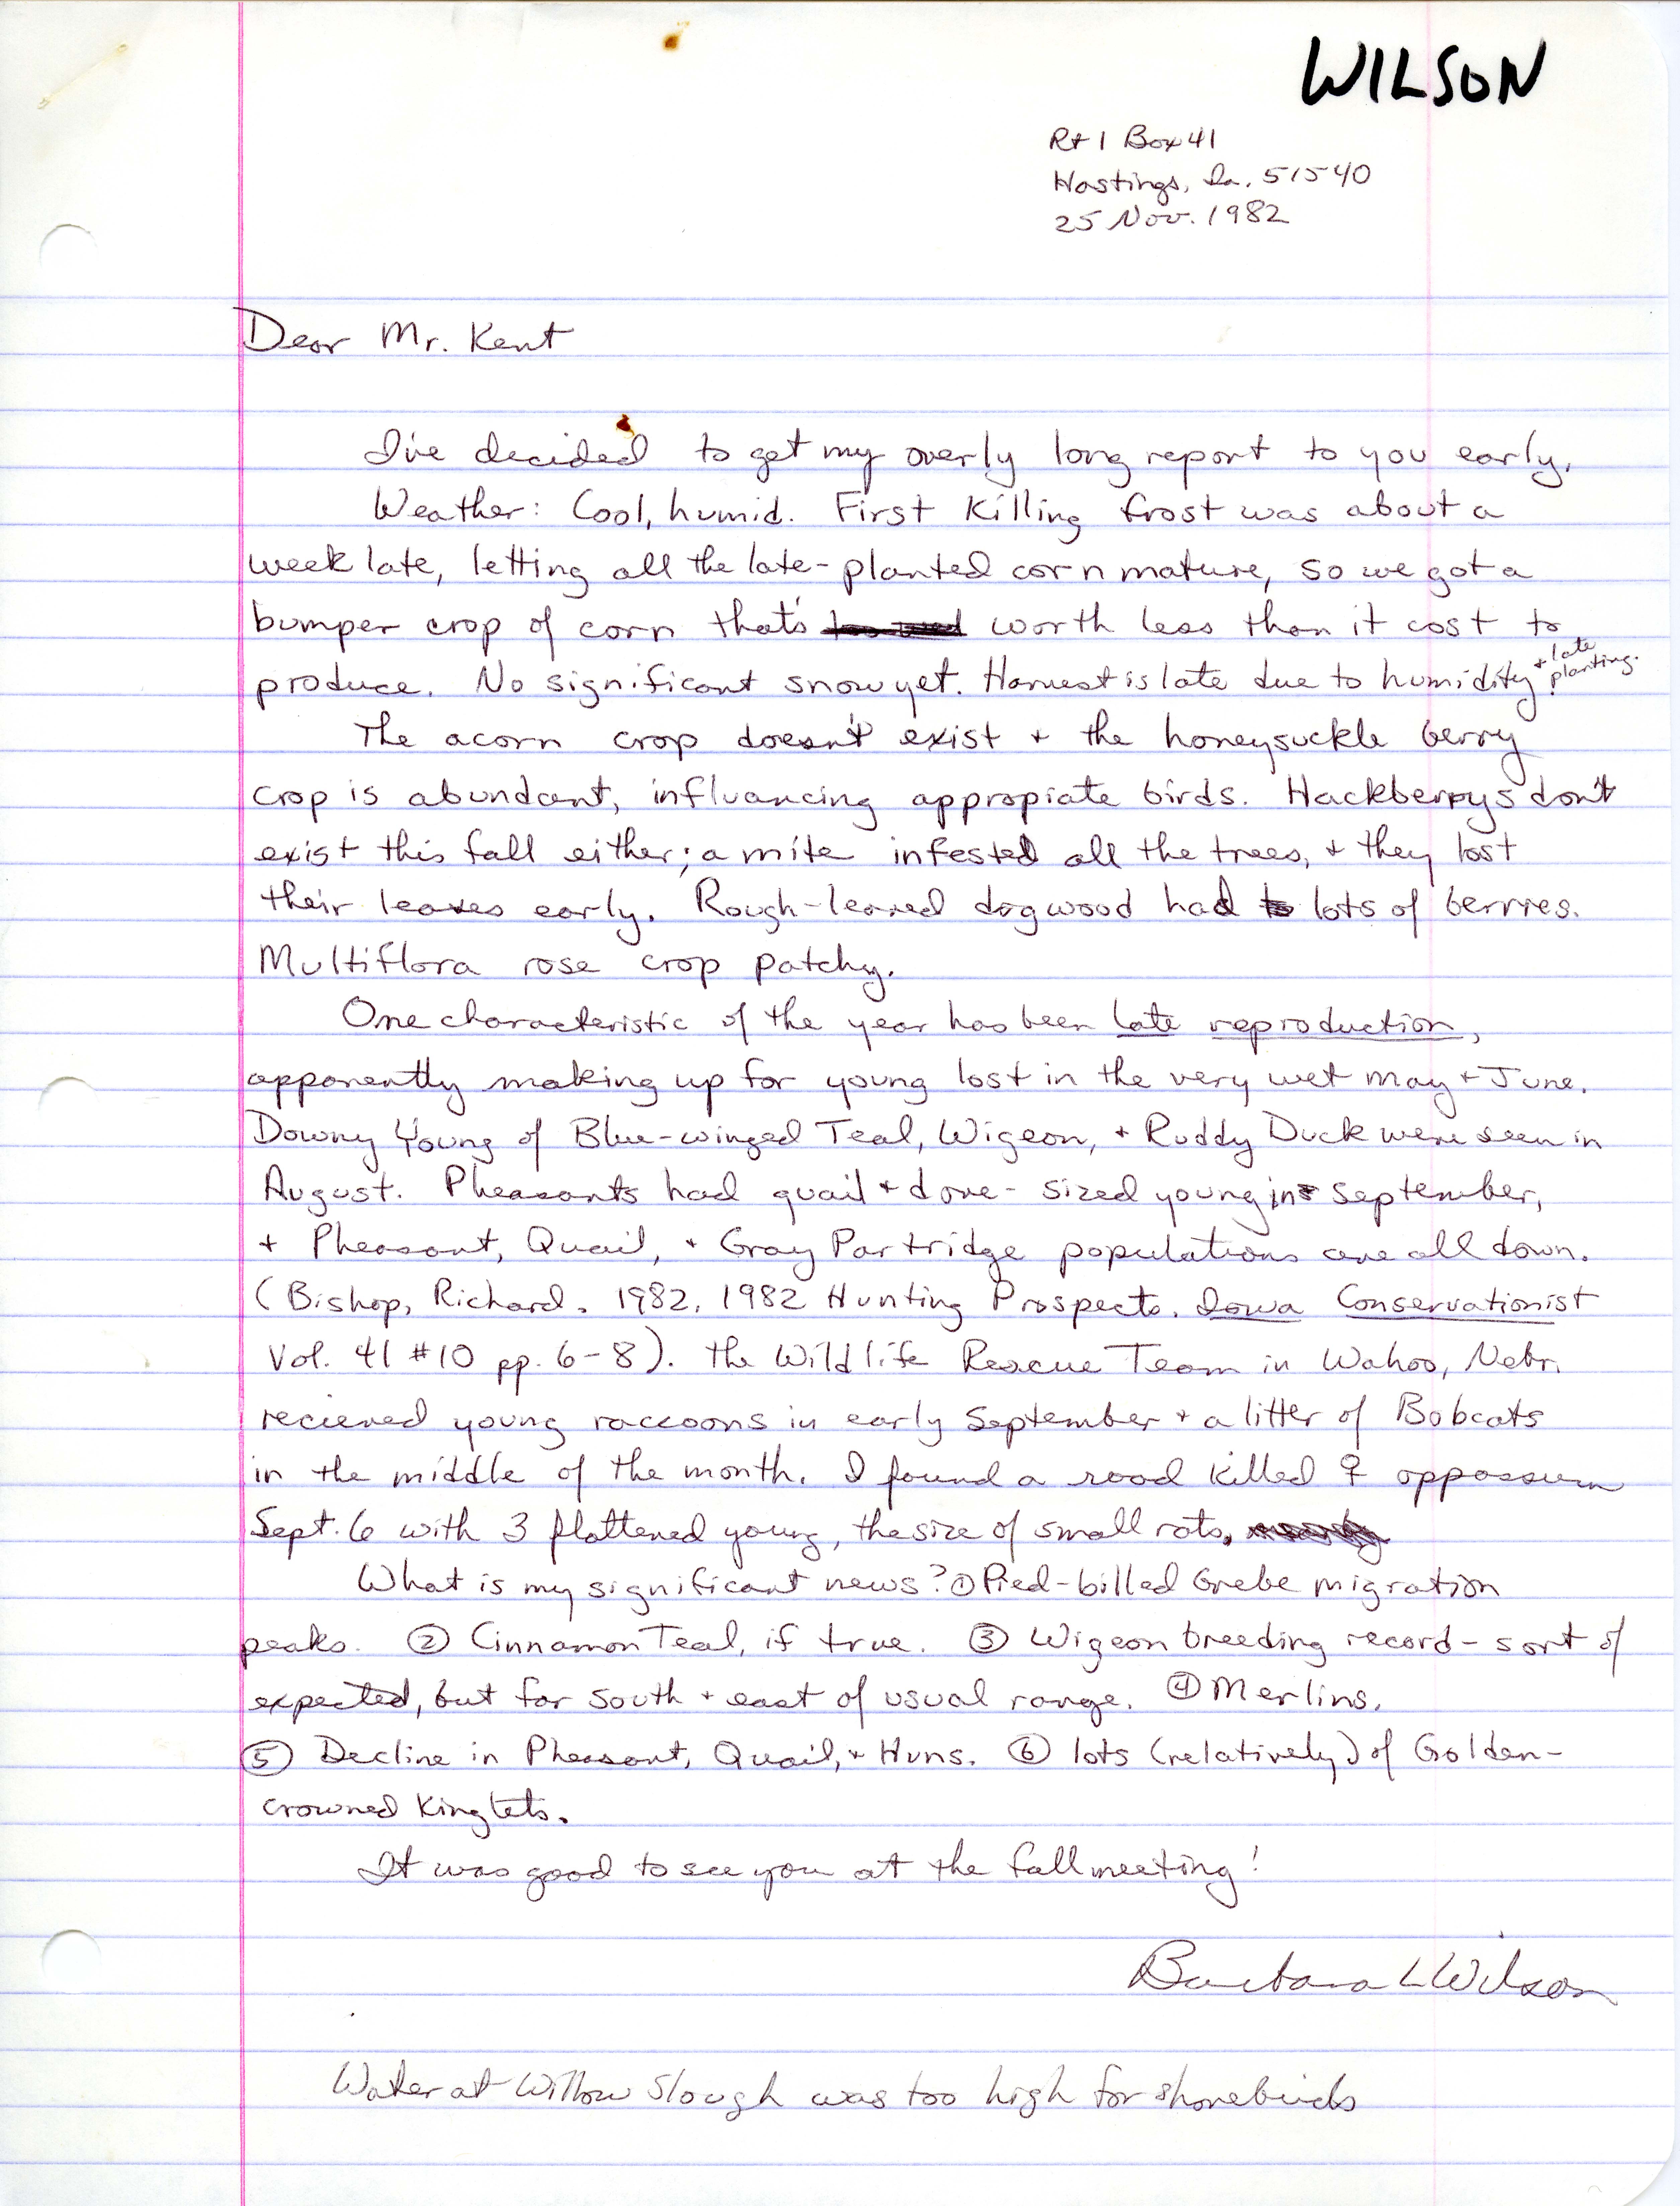 Barbara L. Wilson letter to Thomas H. Kent regarding field notes, November 25, 1982